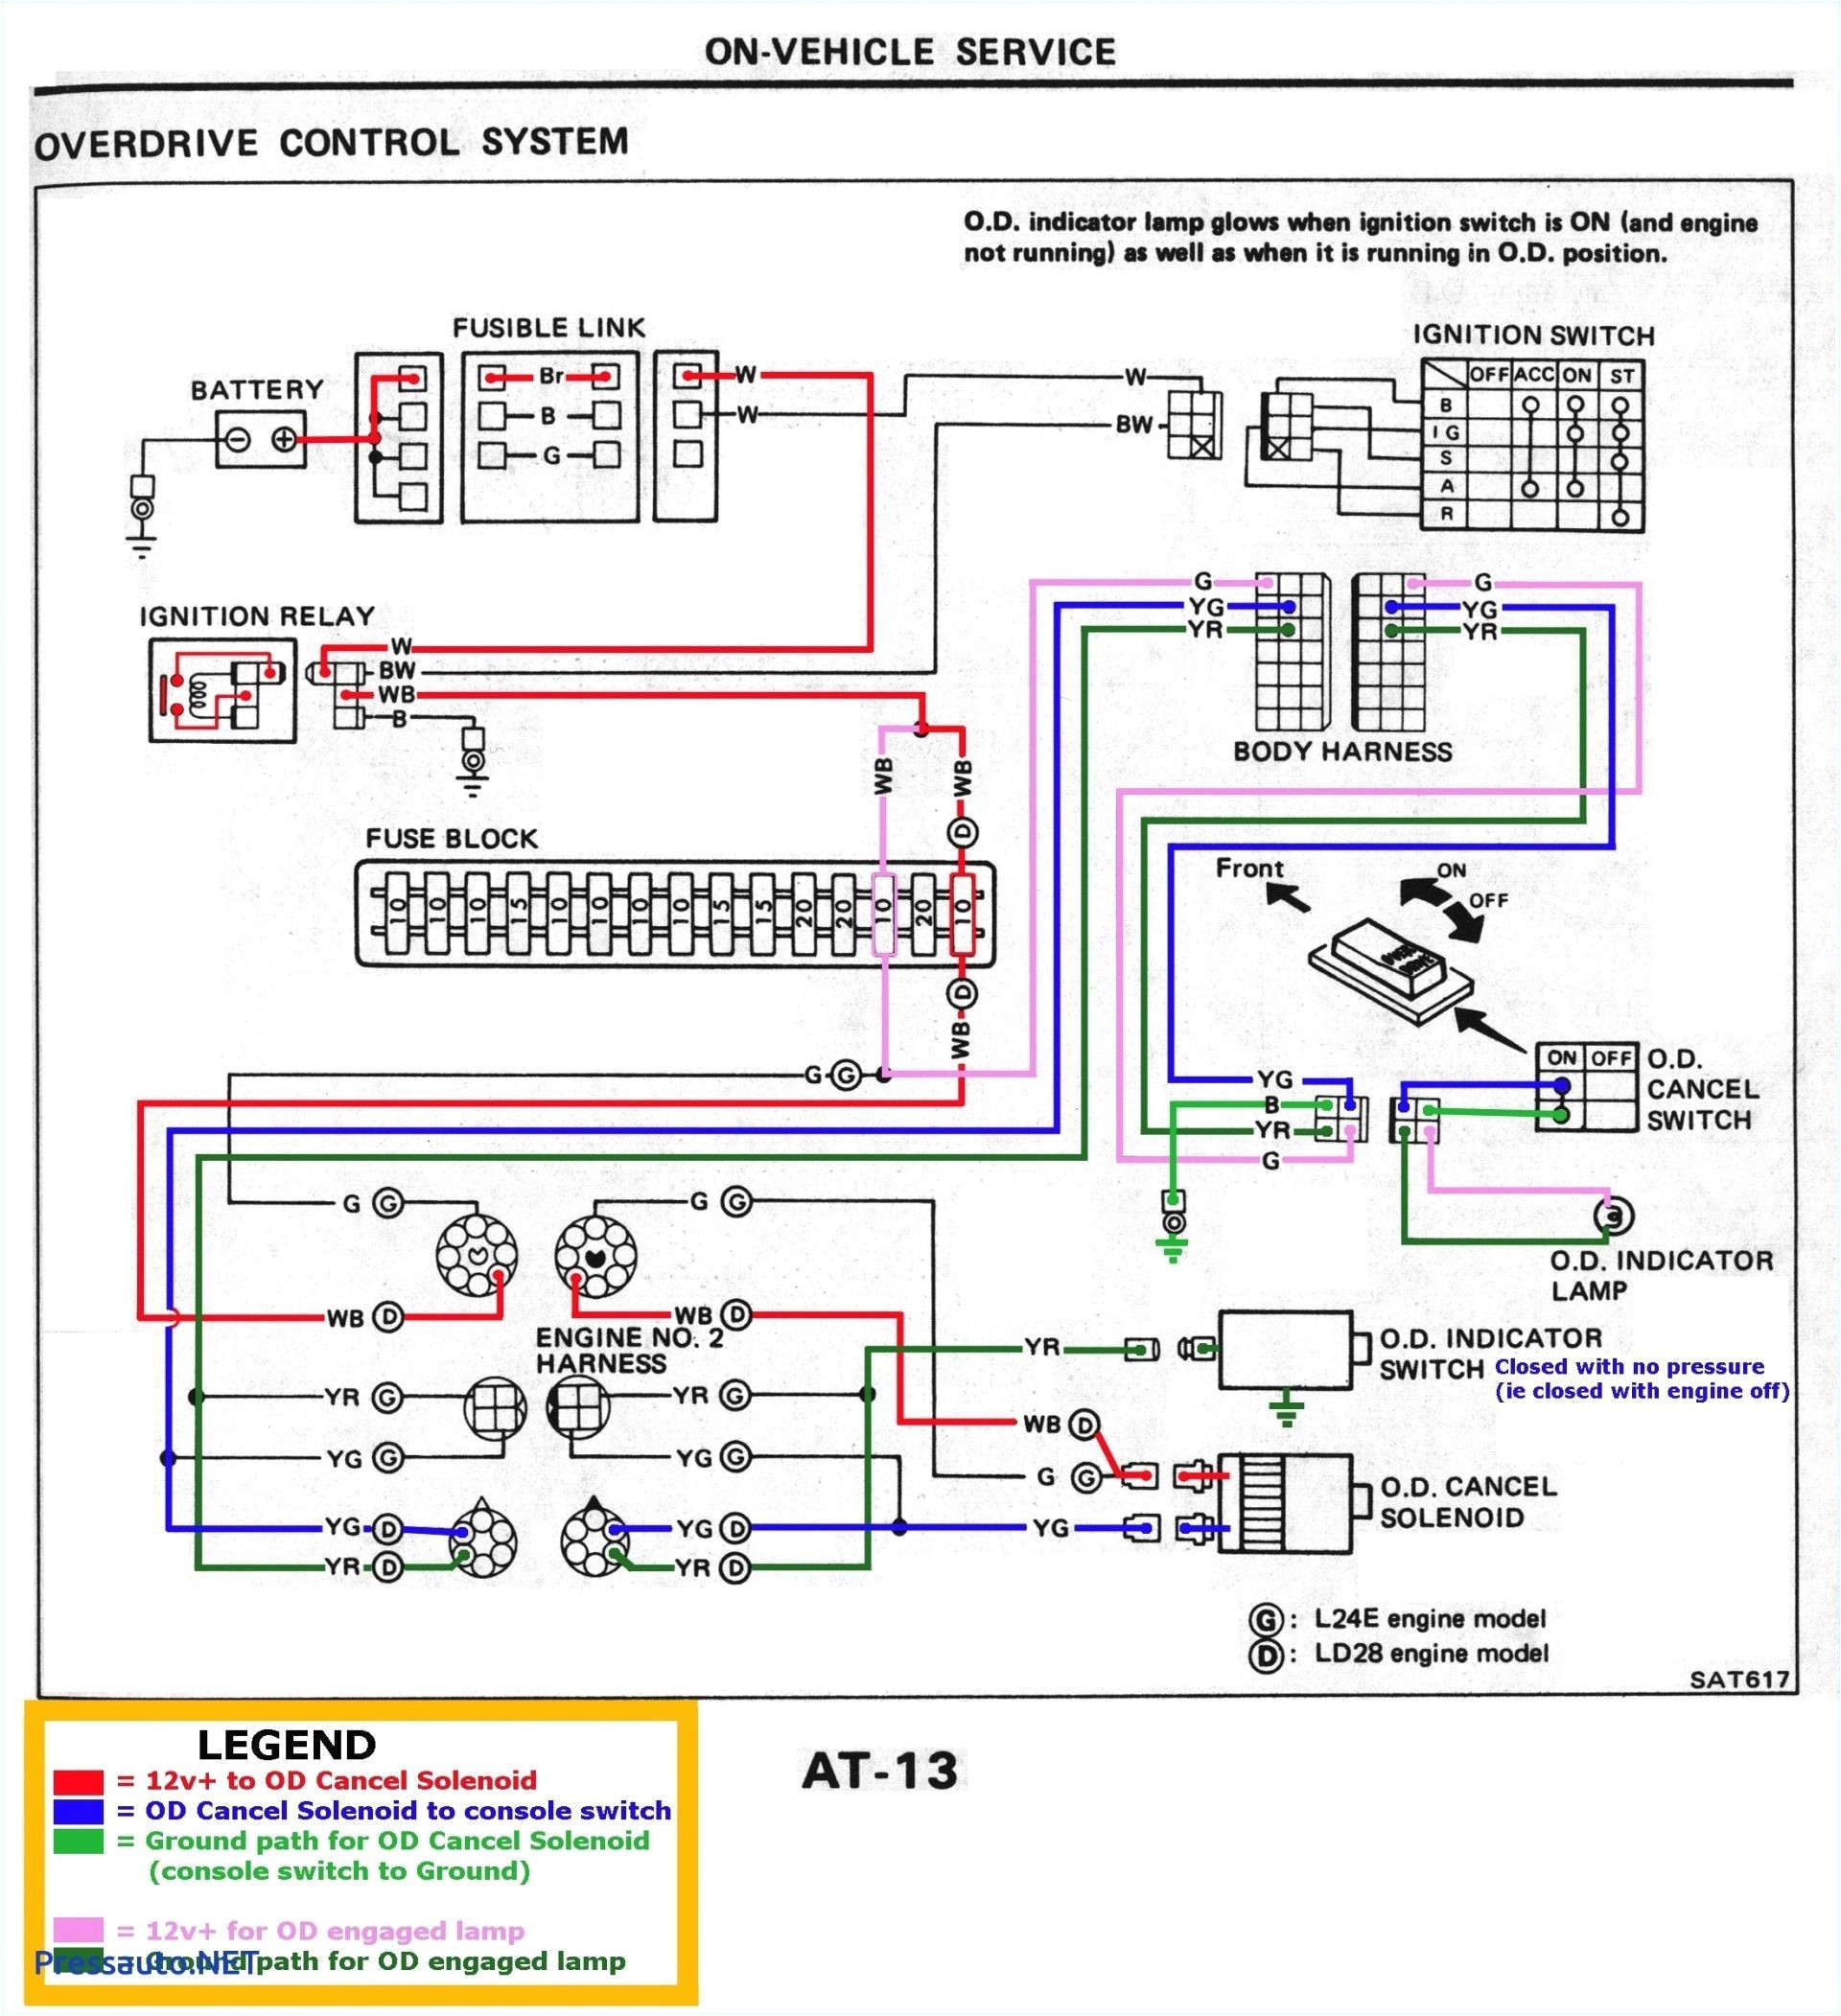 denso diagram wiring alternator tn421000 0750 wiring diagram load diagram denso wiring menka